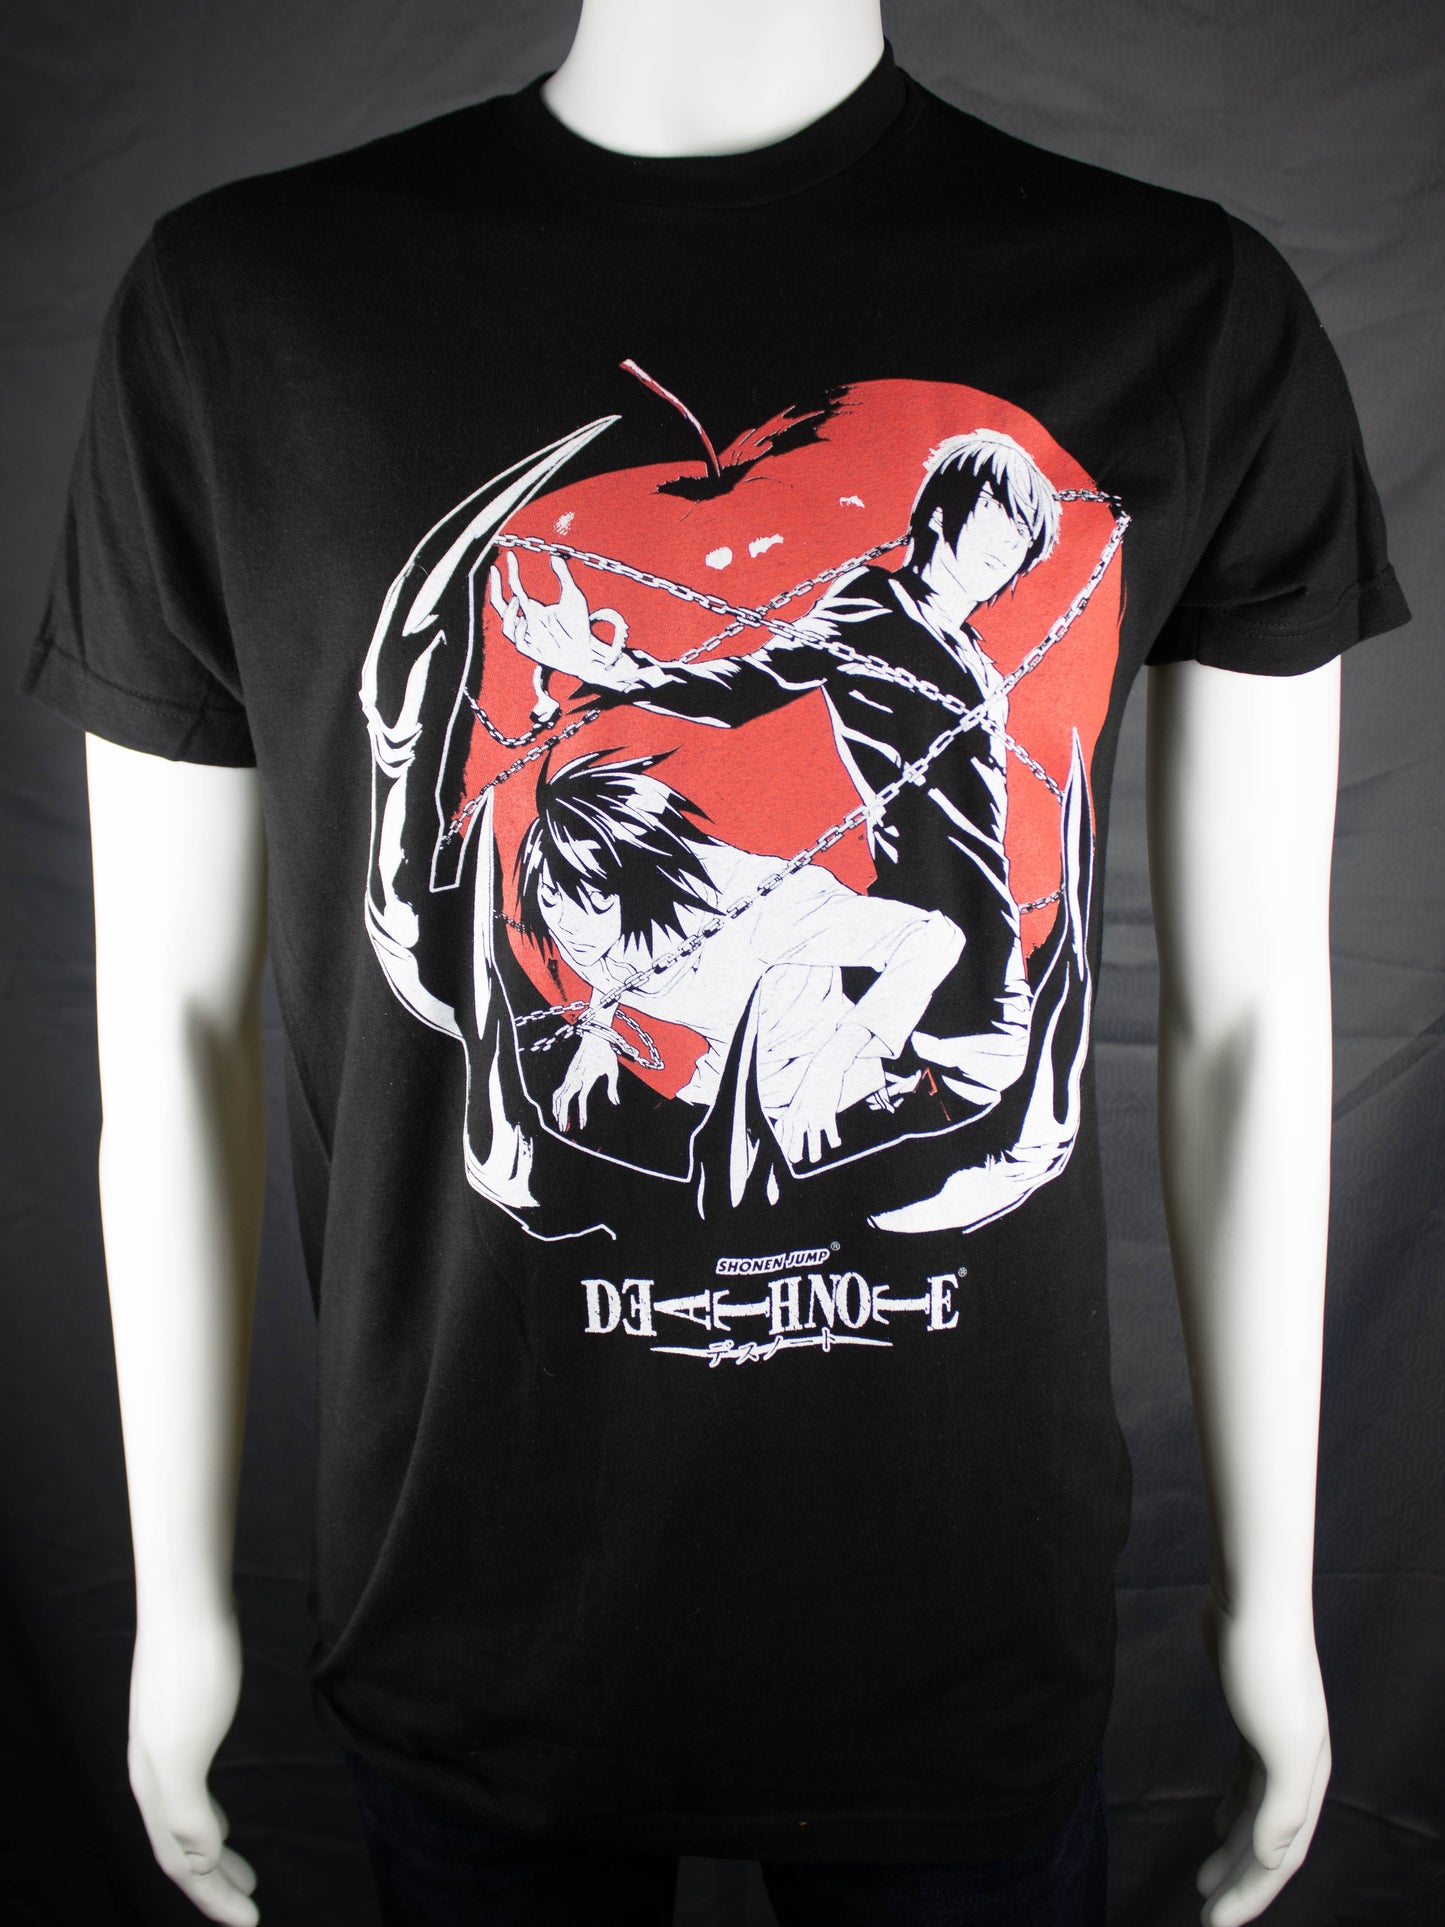 Light & L Death Note Black Shirt